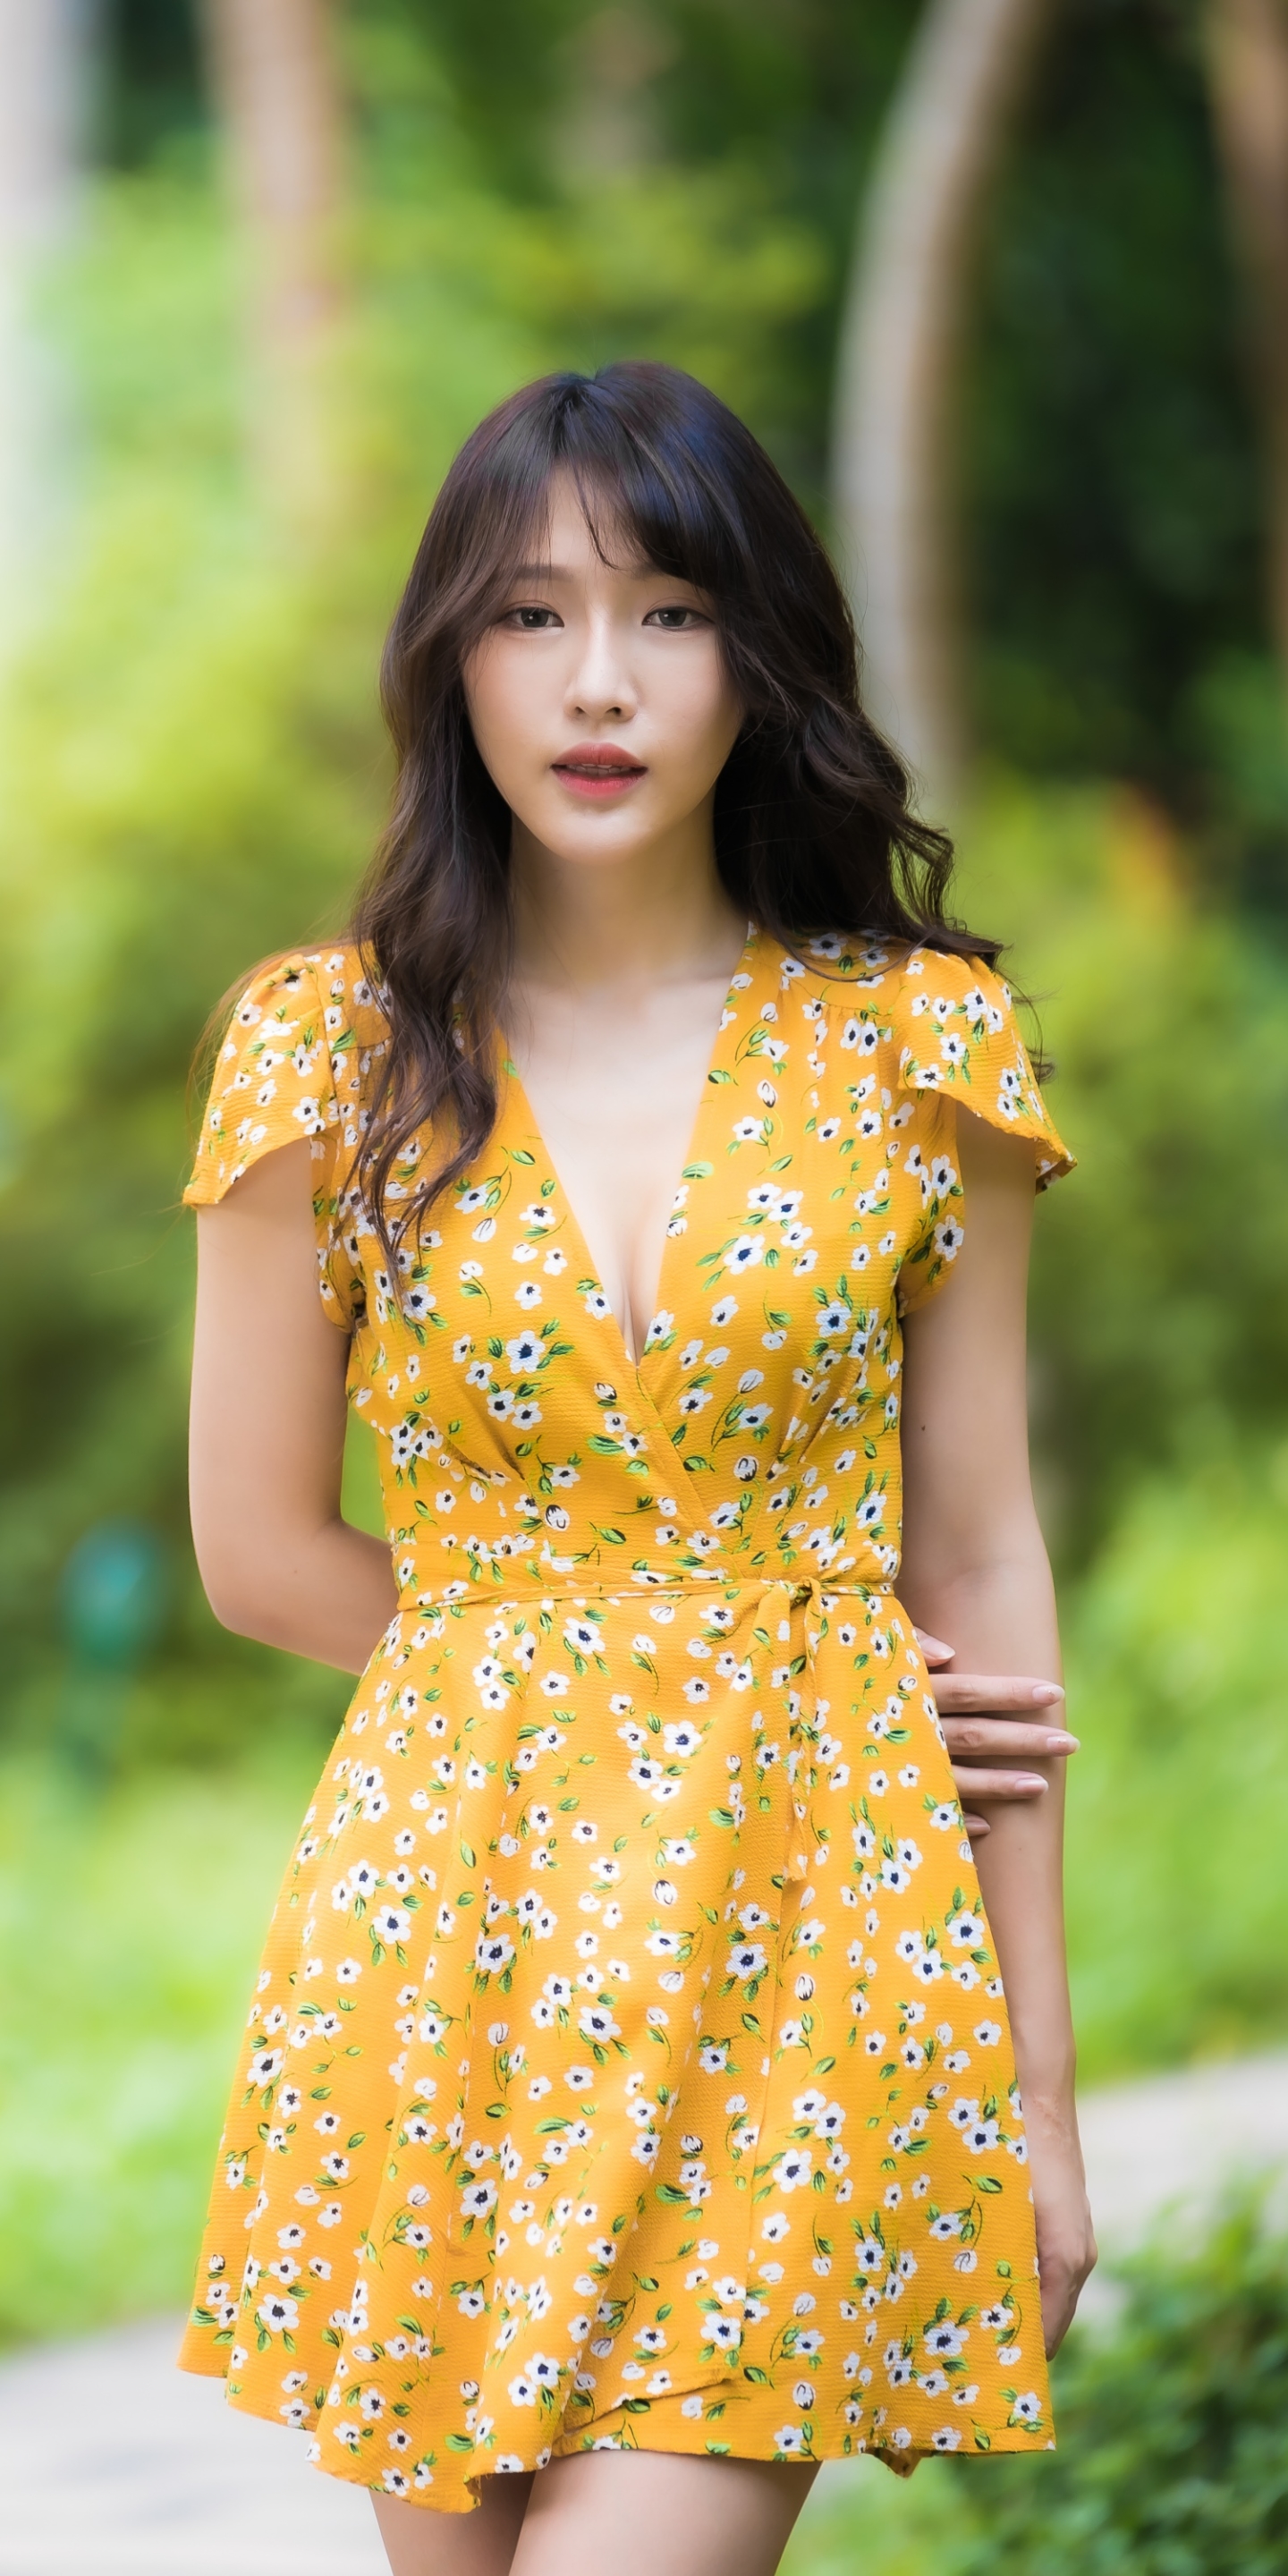 Handy-Wallpaper Modell, Frauen, Gelbes Kleid, Schwarzes Haar, Asiatinnen kostenlos herunterladen.